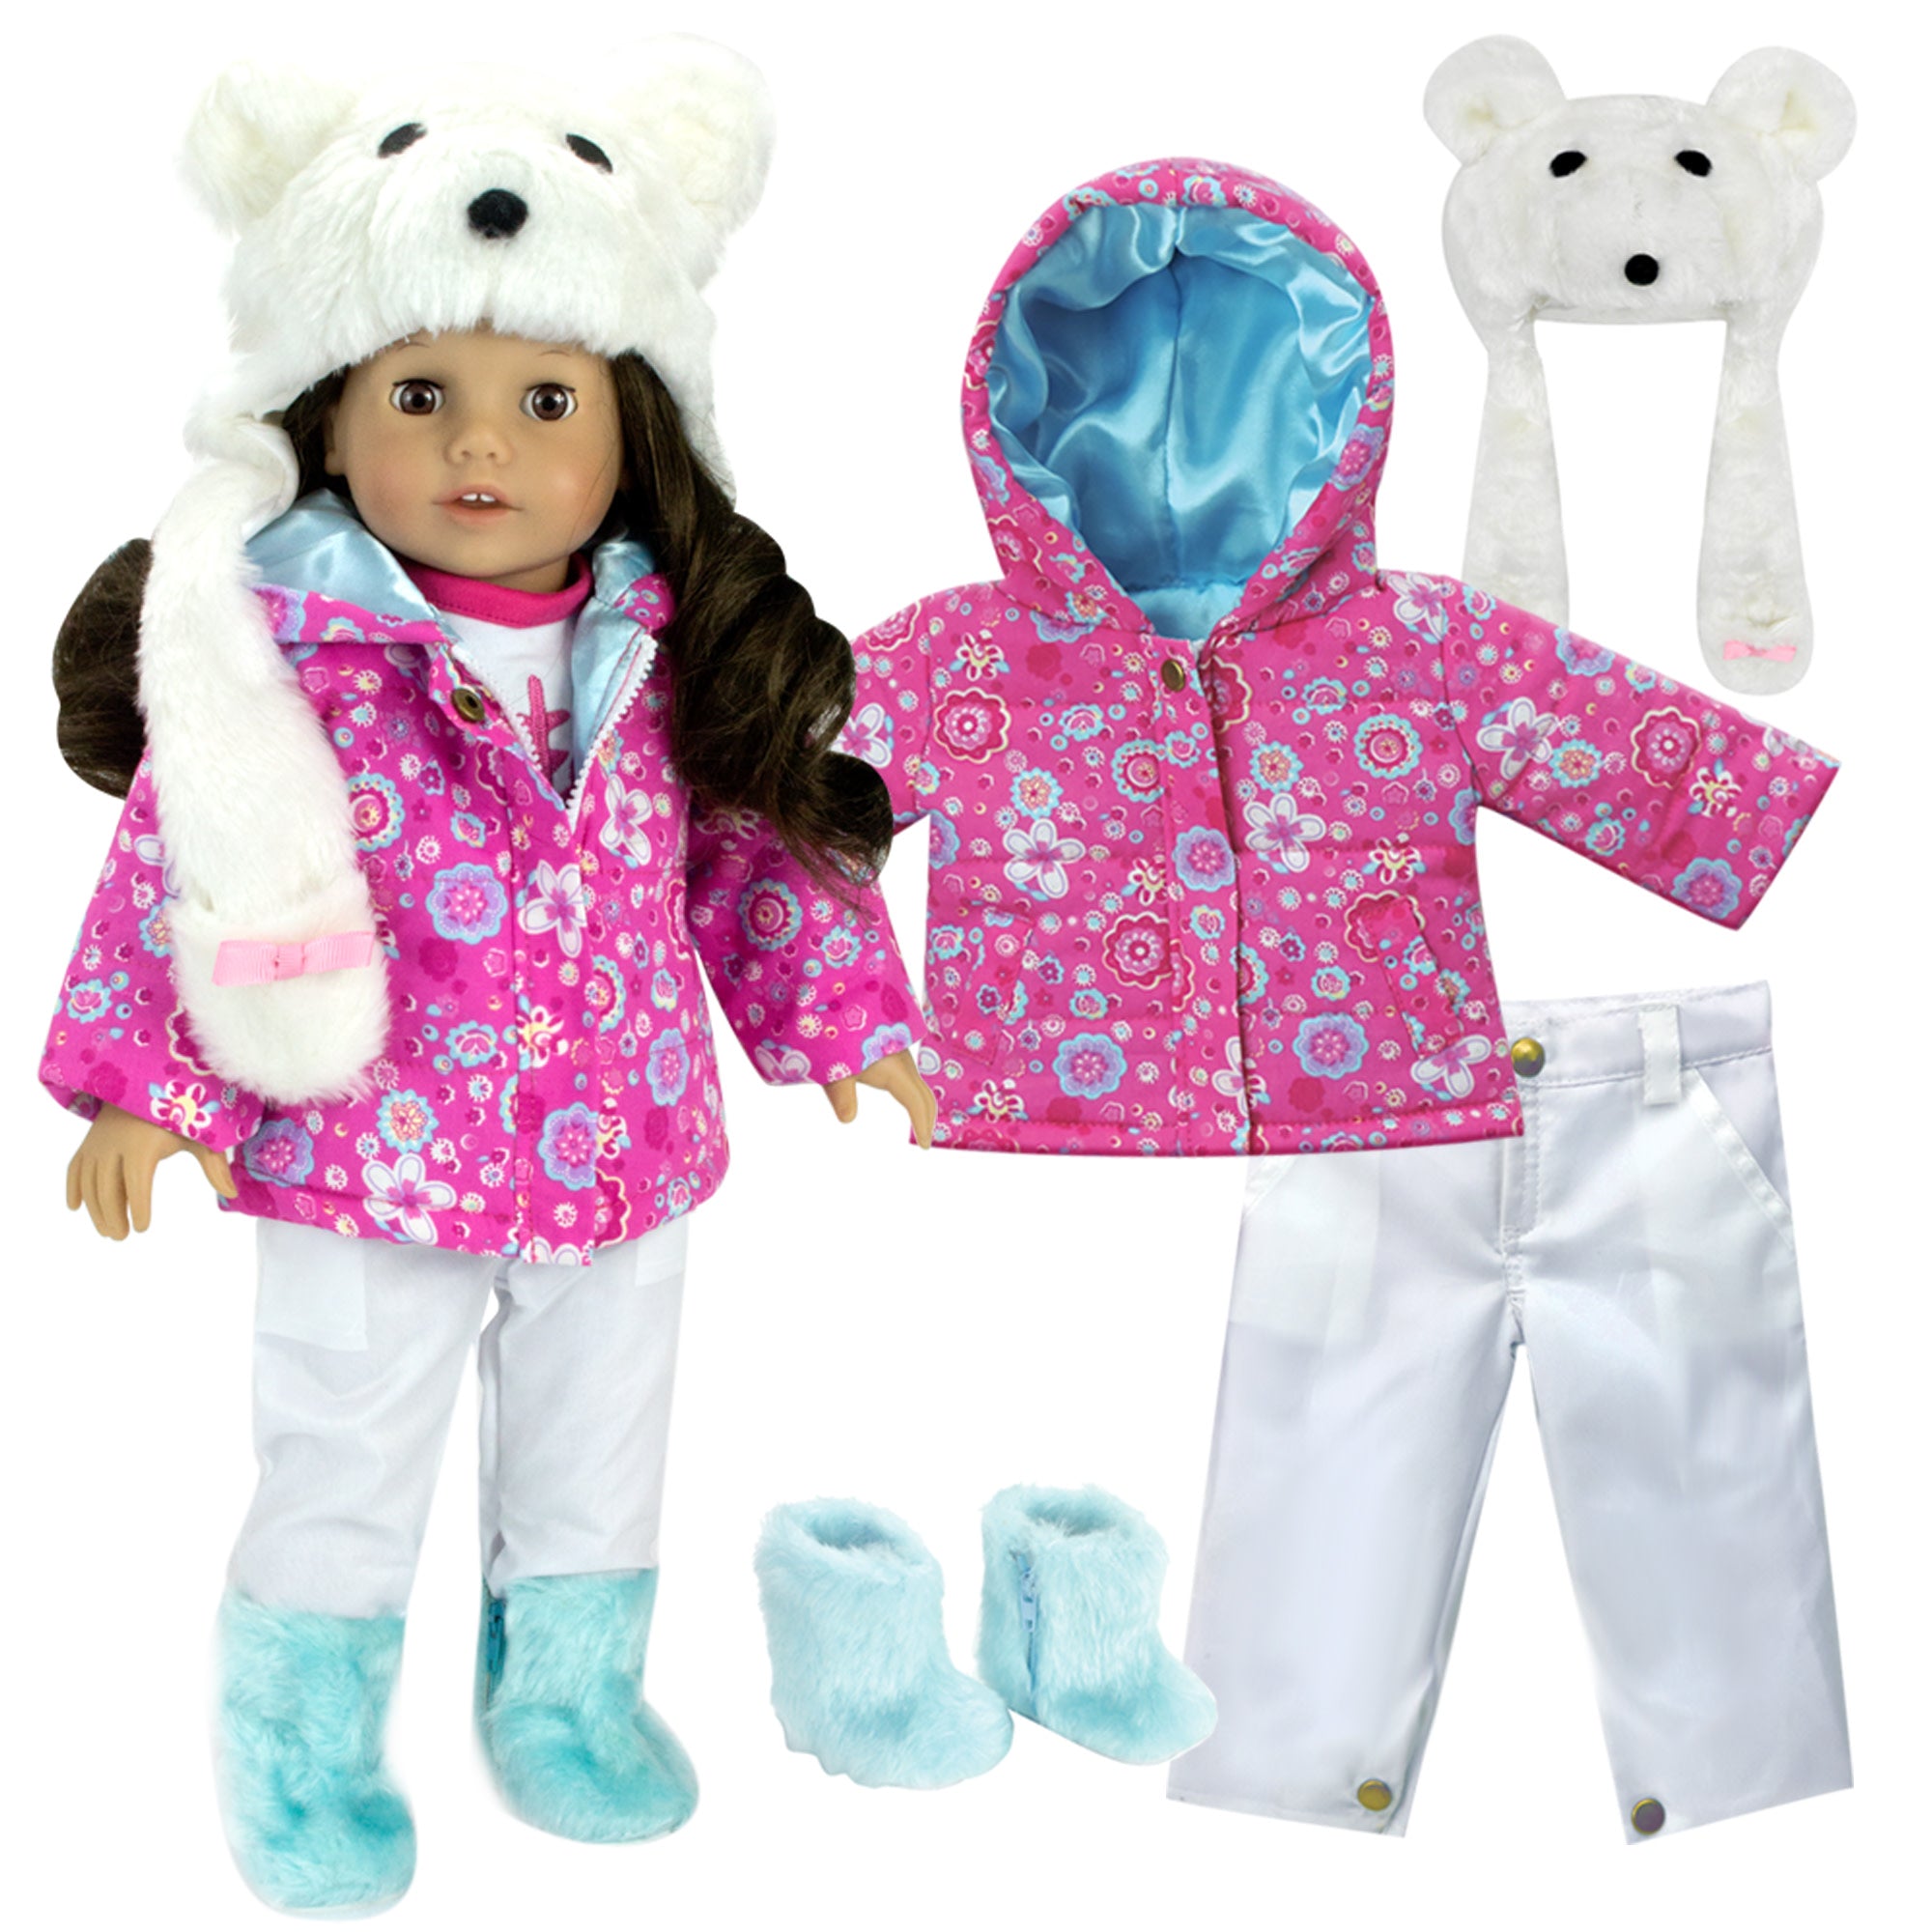 Sophias Doll Snow Outfit Complete with Boots for 18" Dolls